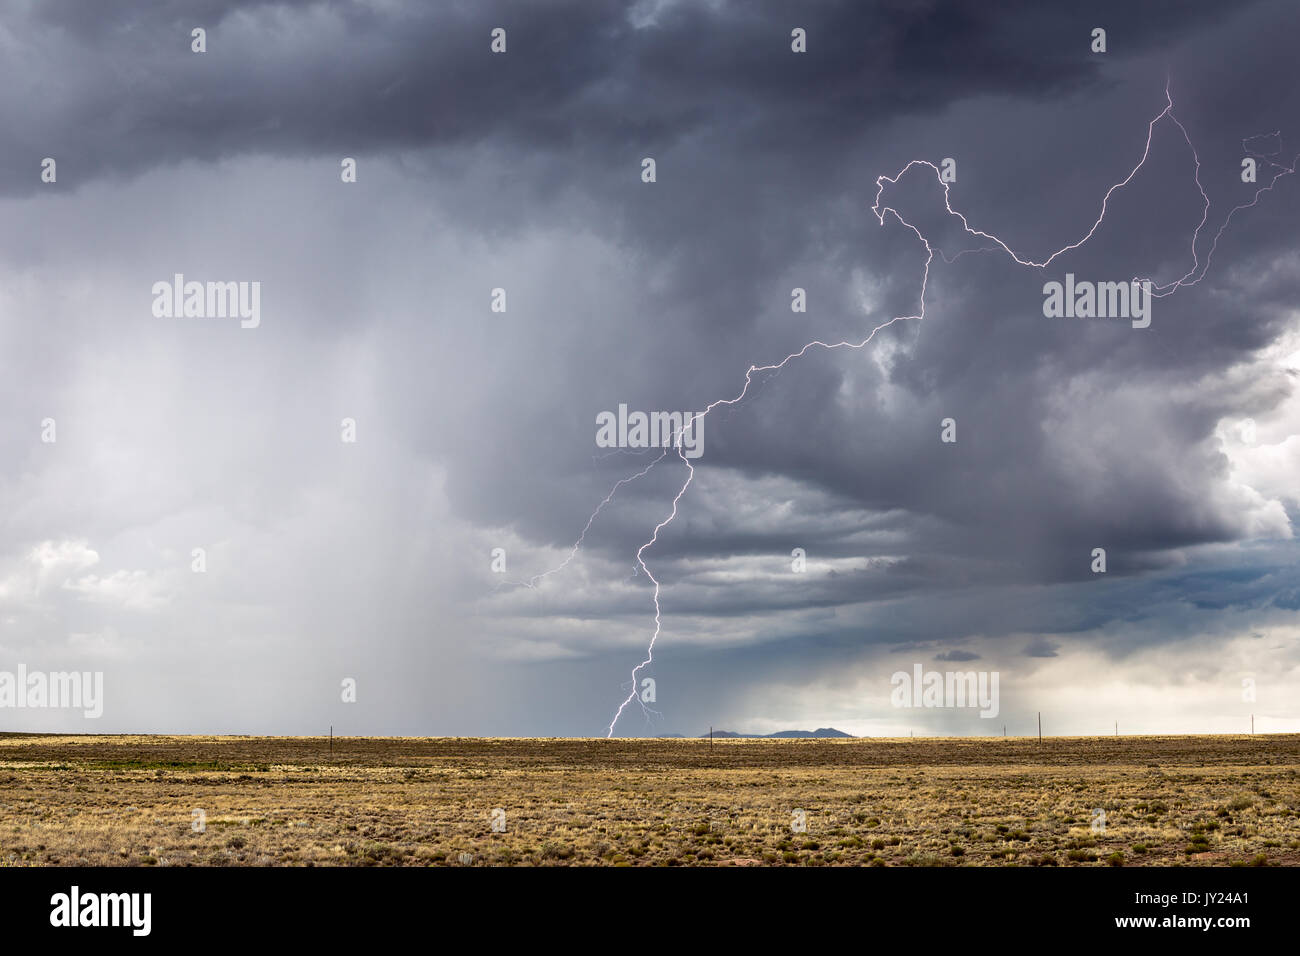 Summer thunderstorm with lightning bolt and rain in the desert near Two Guns, Arizona Stock Photo